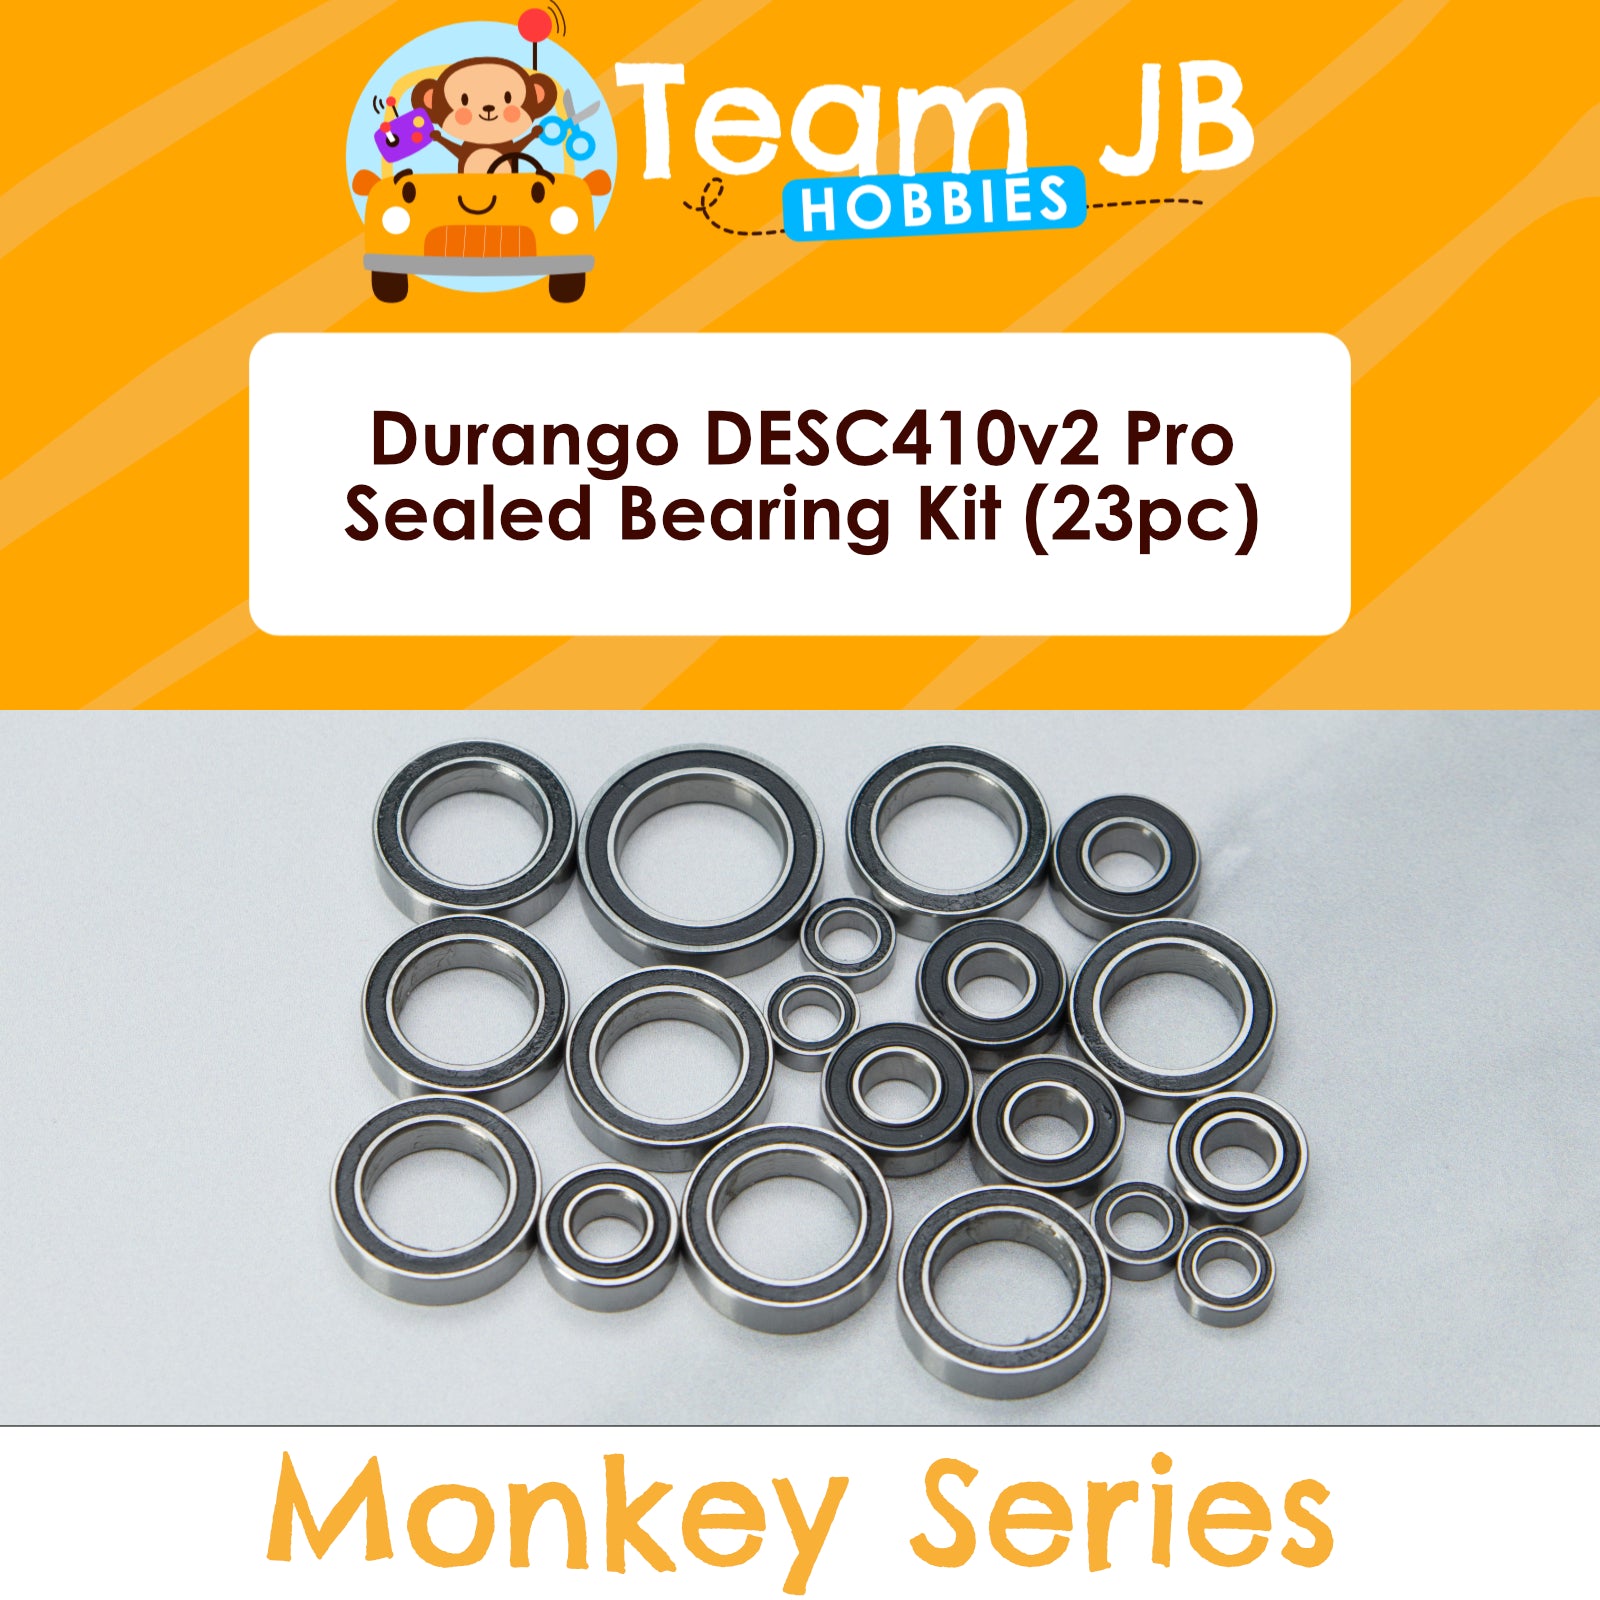 Durango DESC410v2 Pro - Sealed Bearing Kit